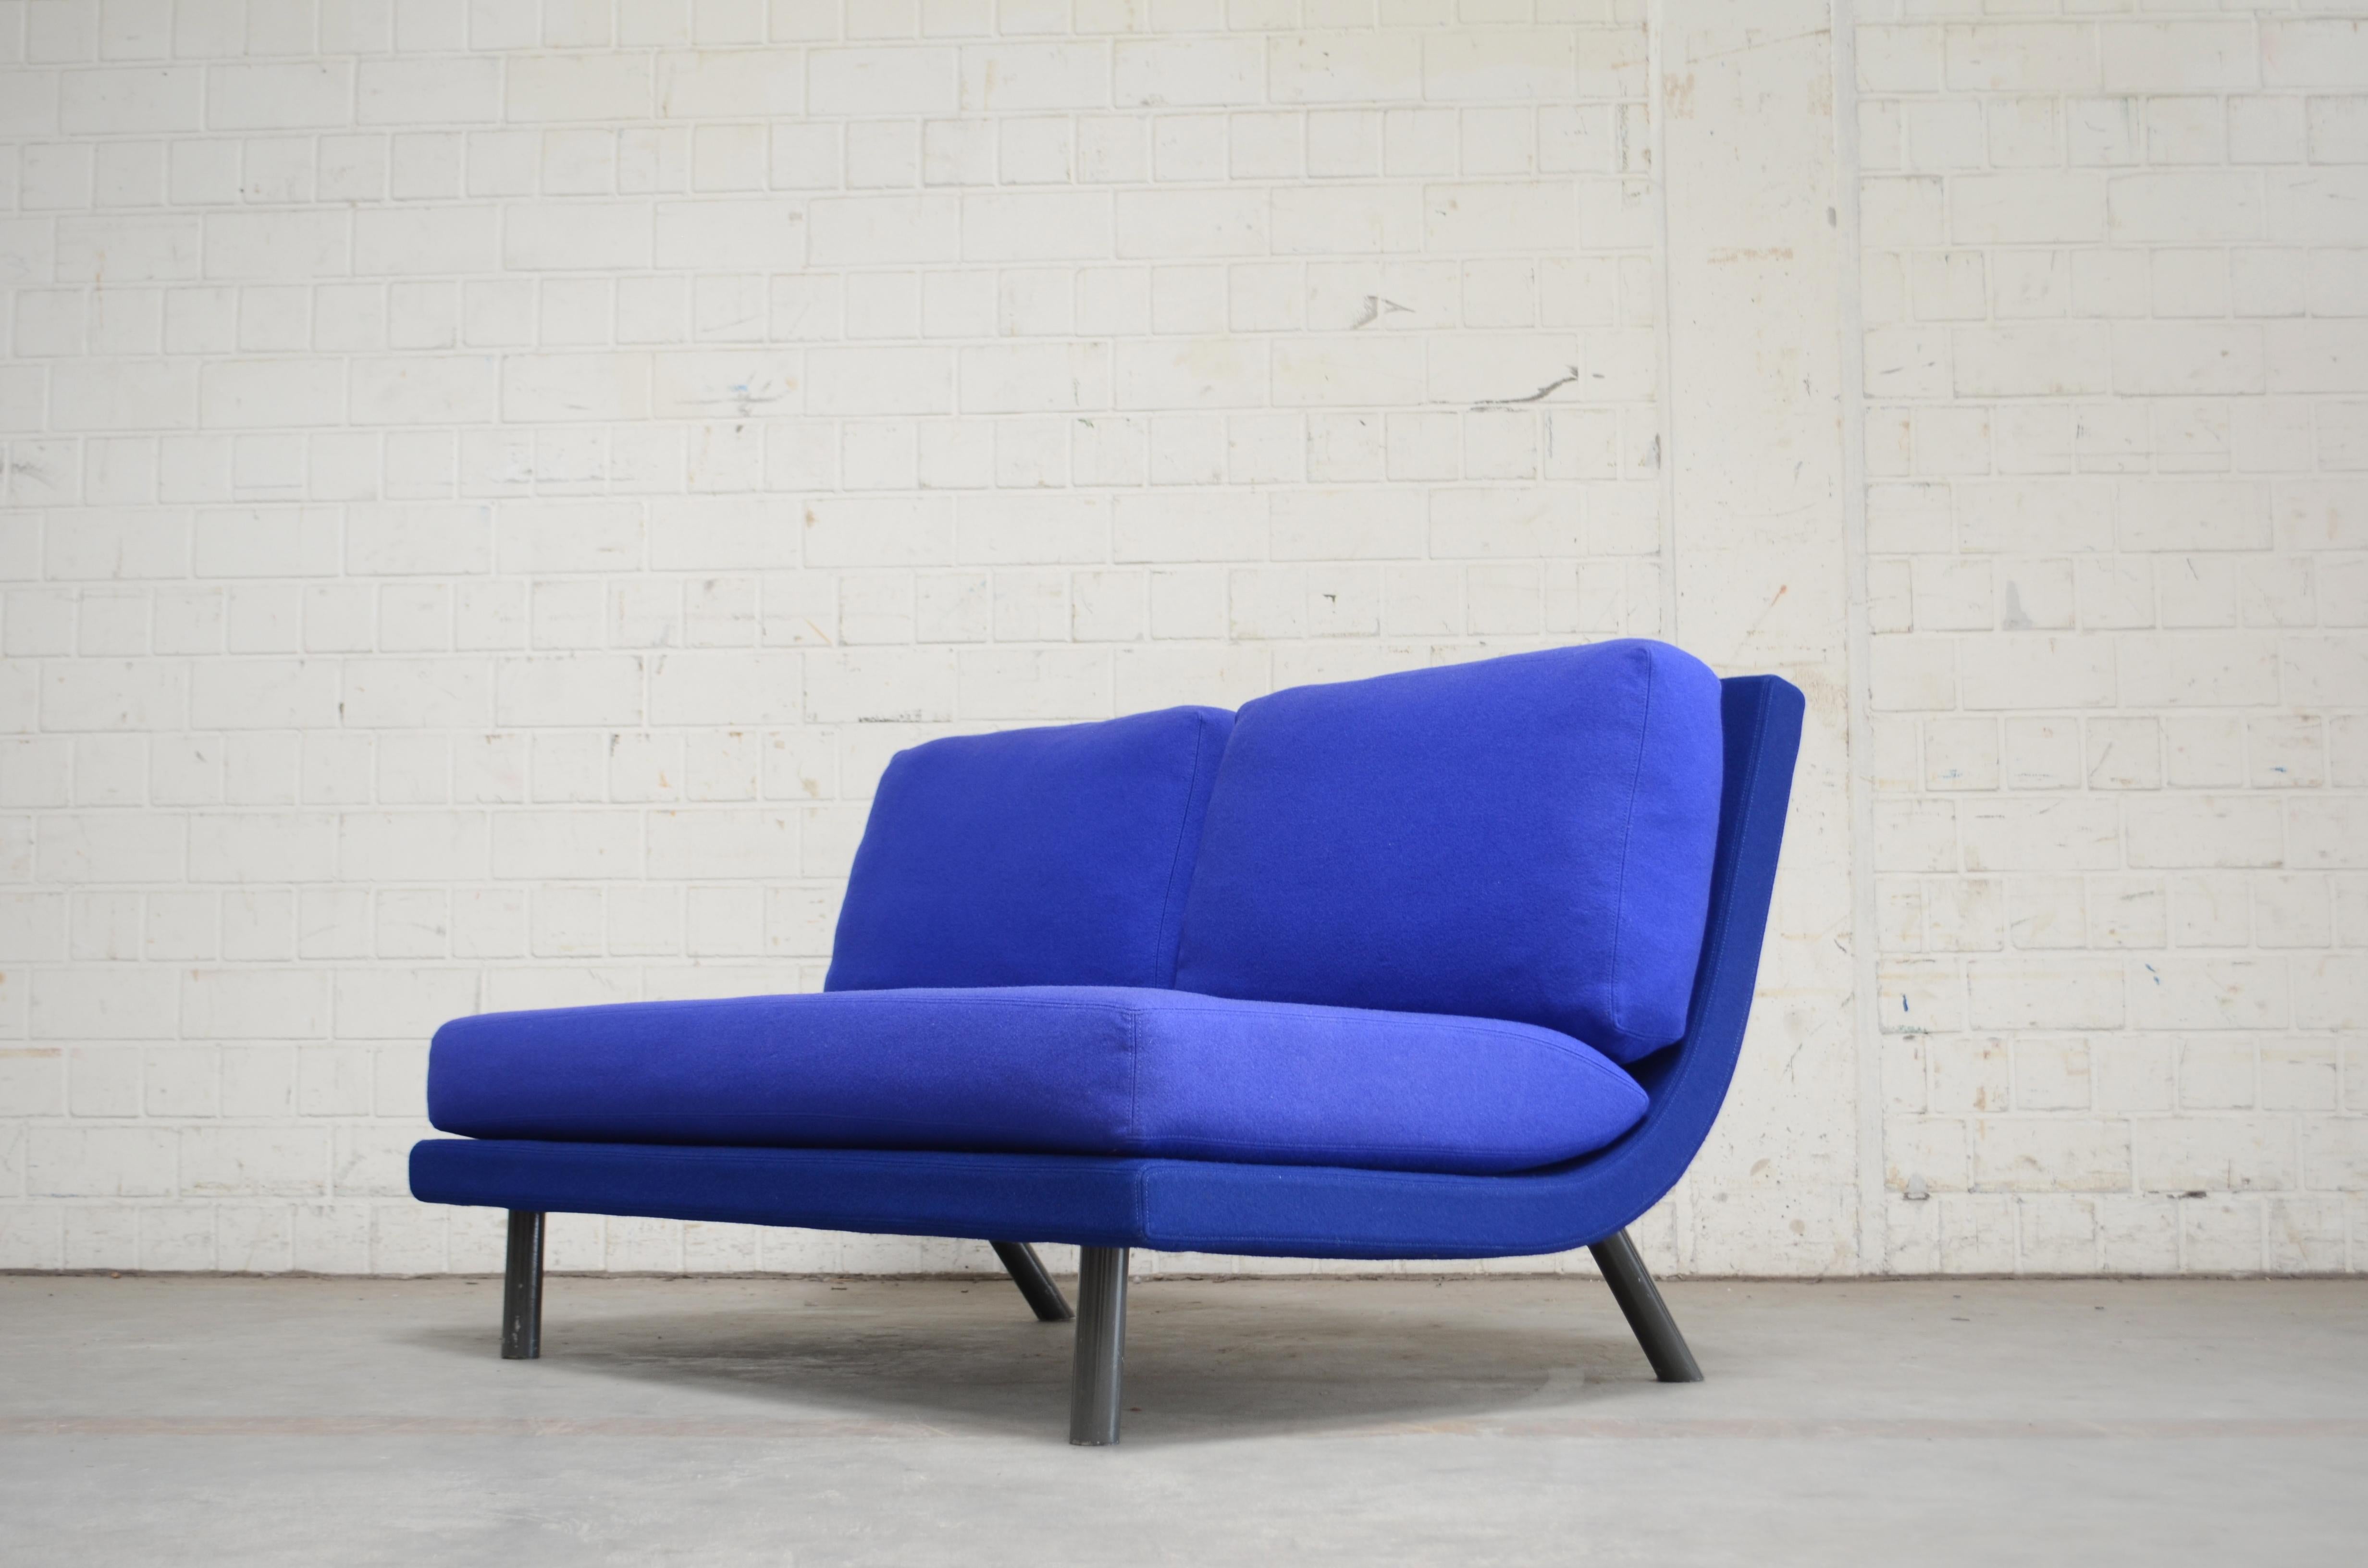 Modern Rare Prototype Sofa Design by David Chipperfield for Interlübke